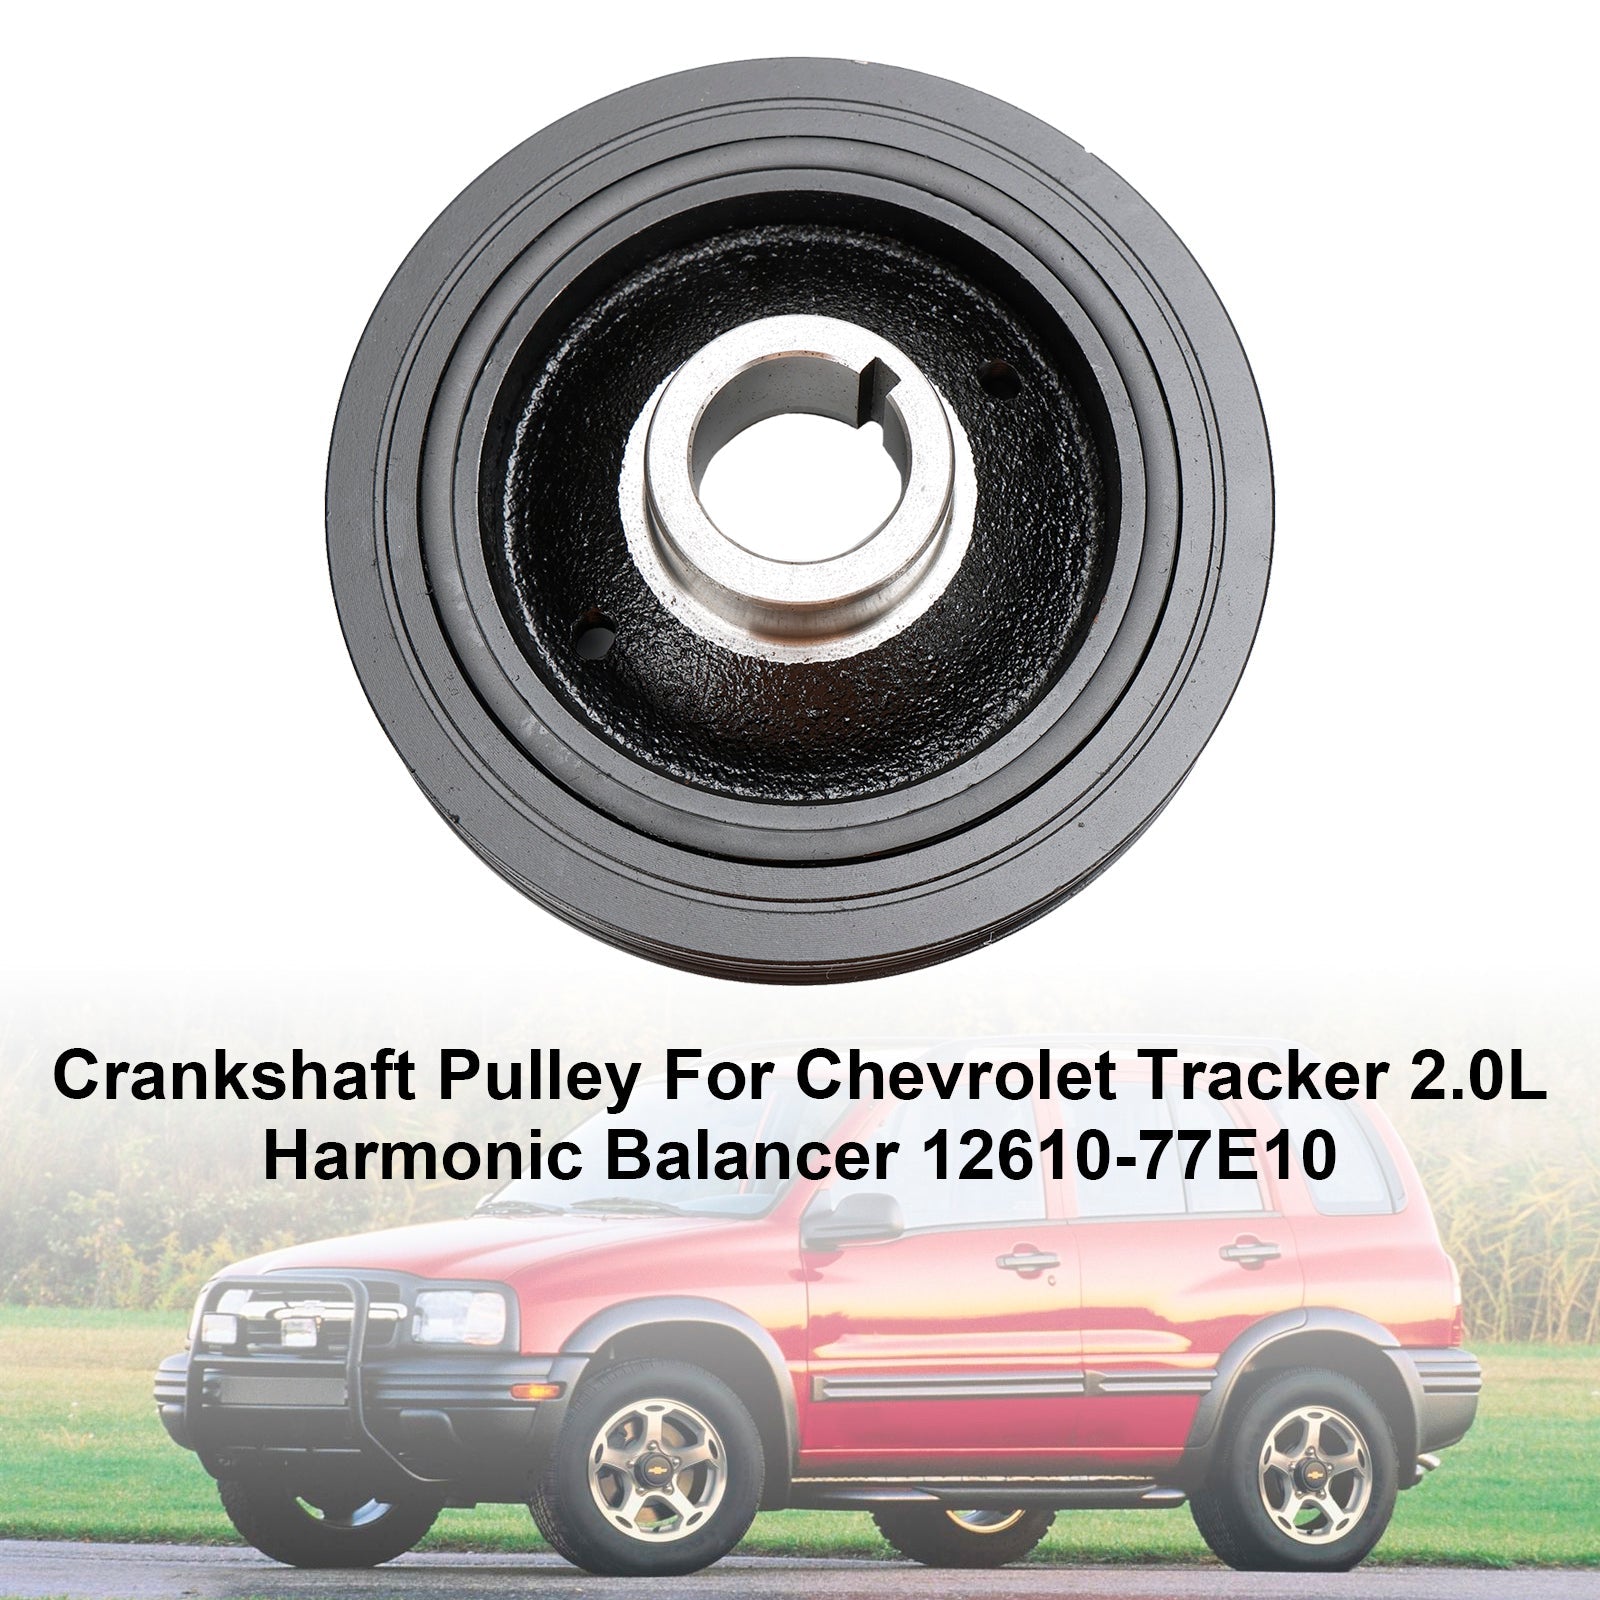 Puleggia albero motore per Chevrolet Tracker 2.0L Harmonic Balancer 12610-77E10 Fedex Express